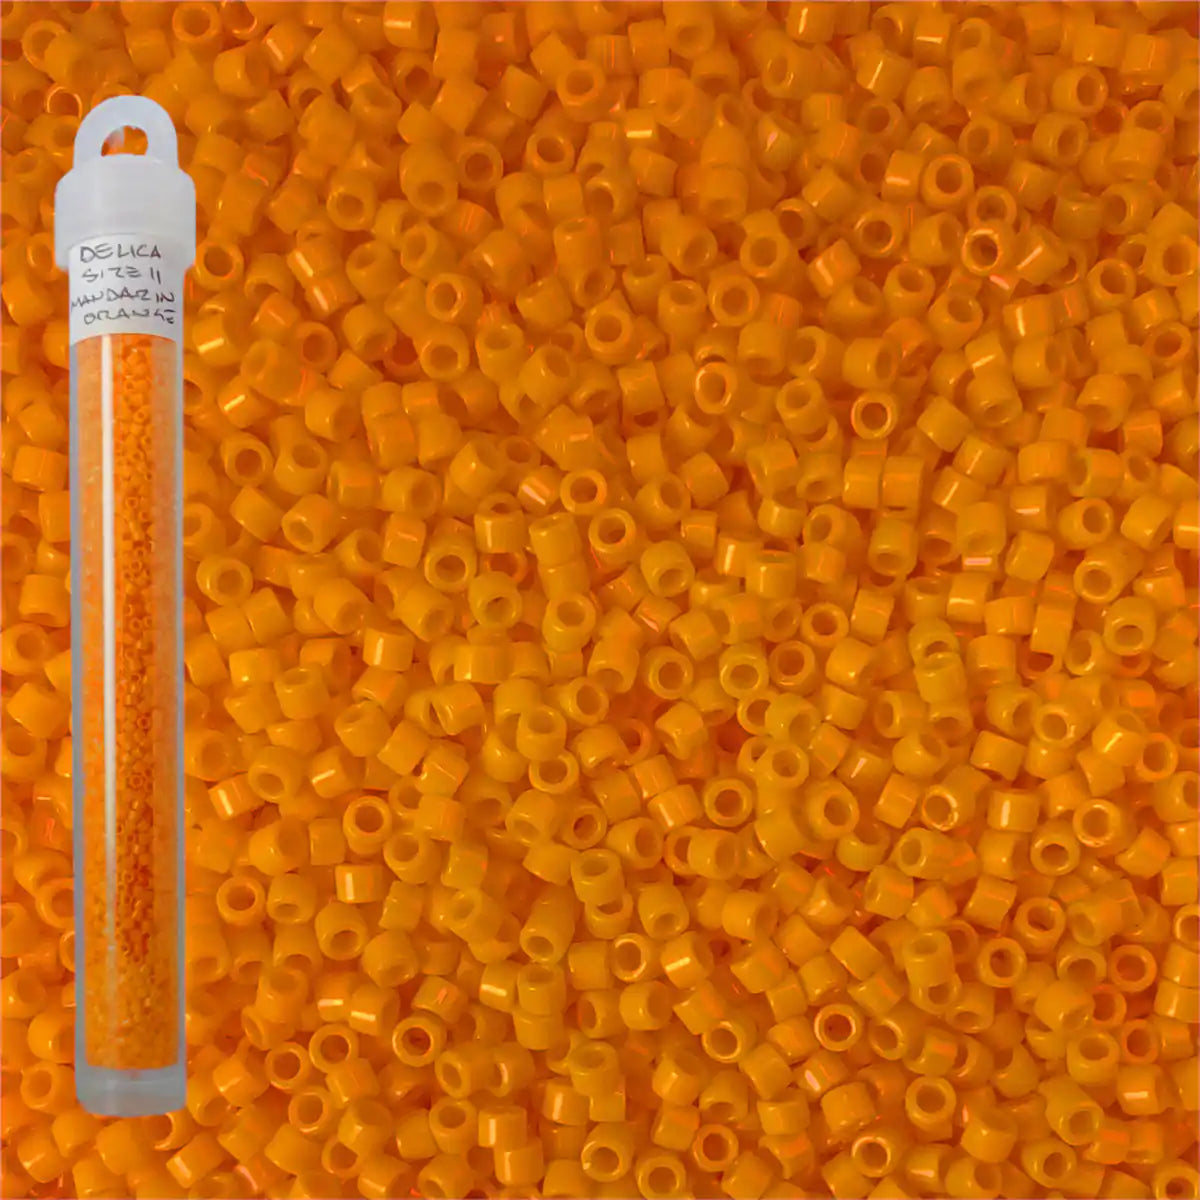 Delica beads mandarin orange size 11